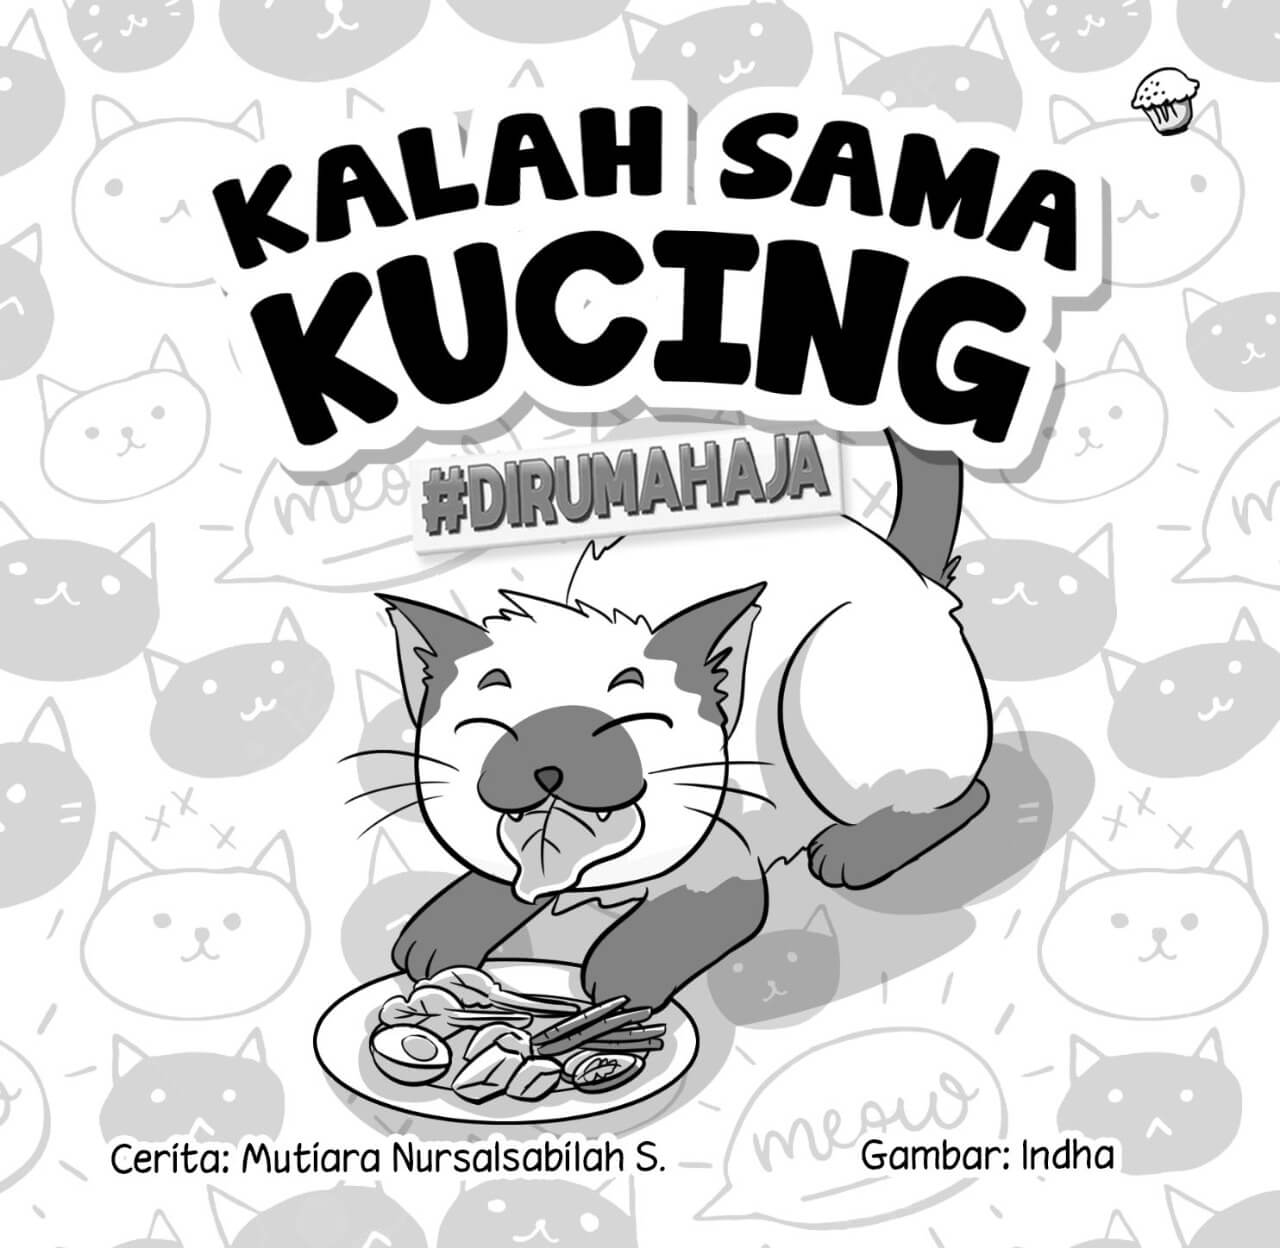 Kalah Sama Kucing cover bw